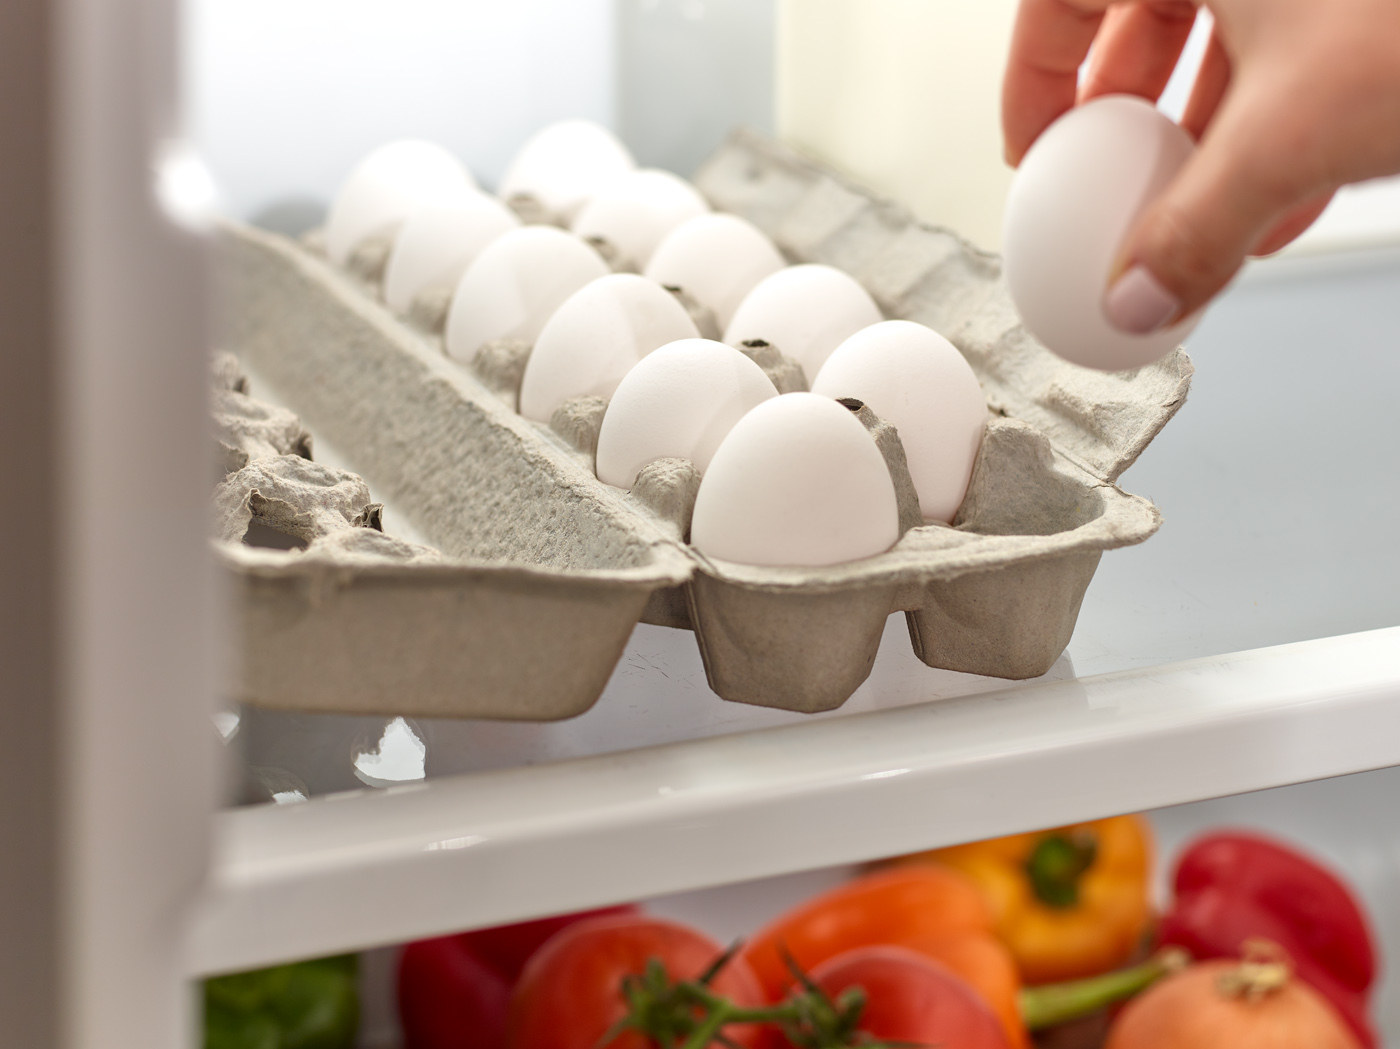 eggs in a carton in the fridge